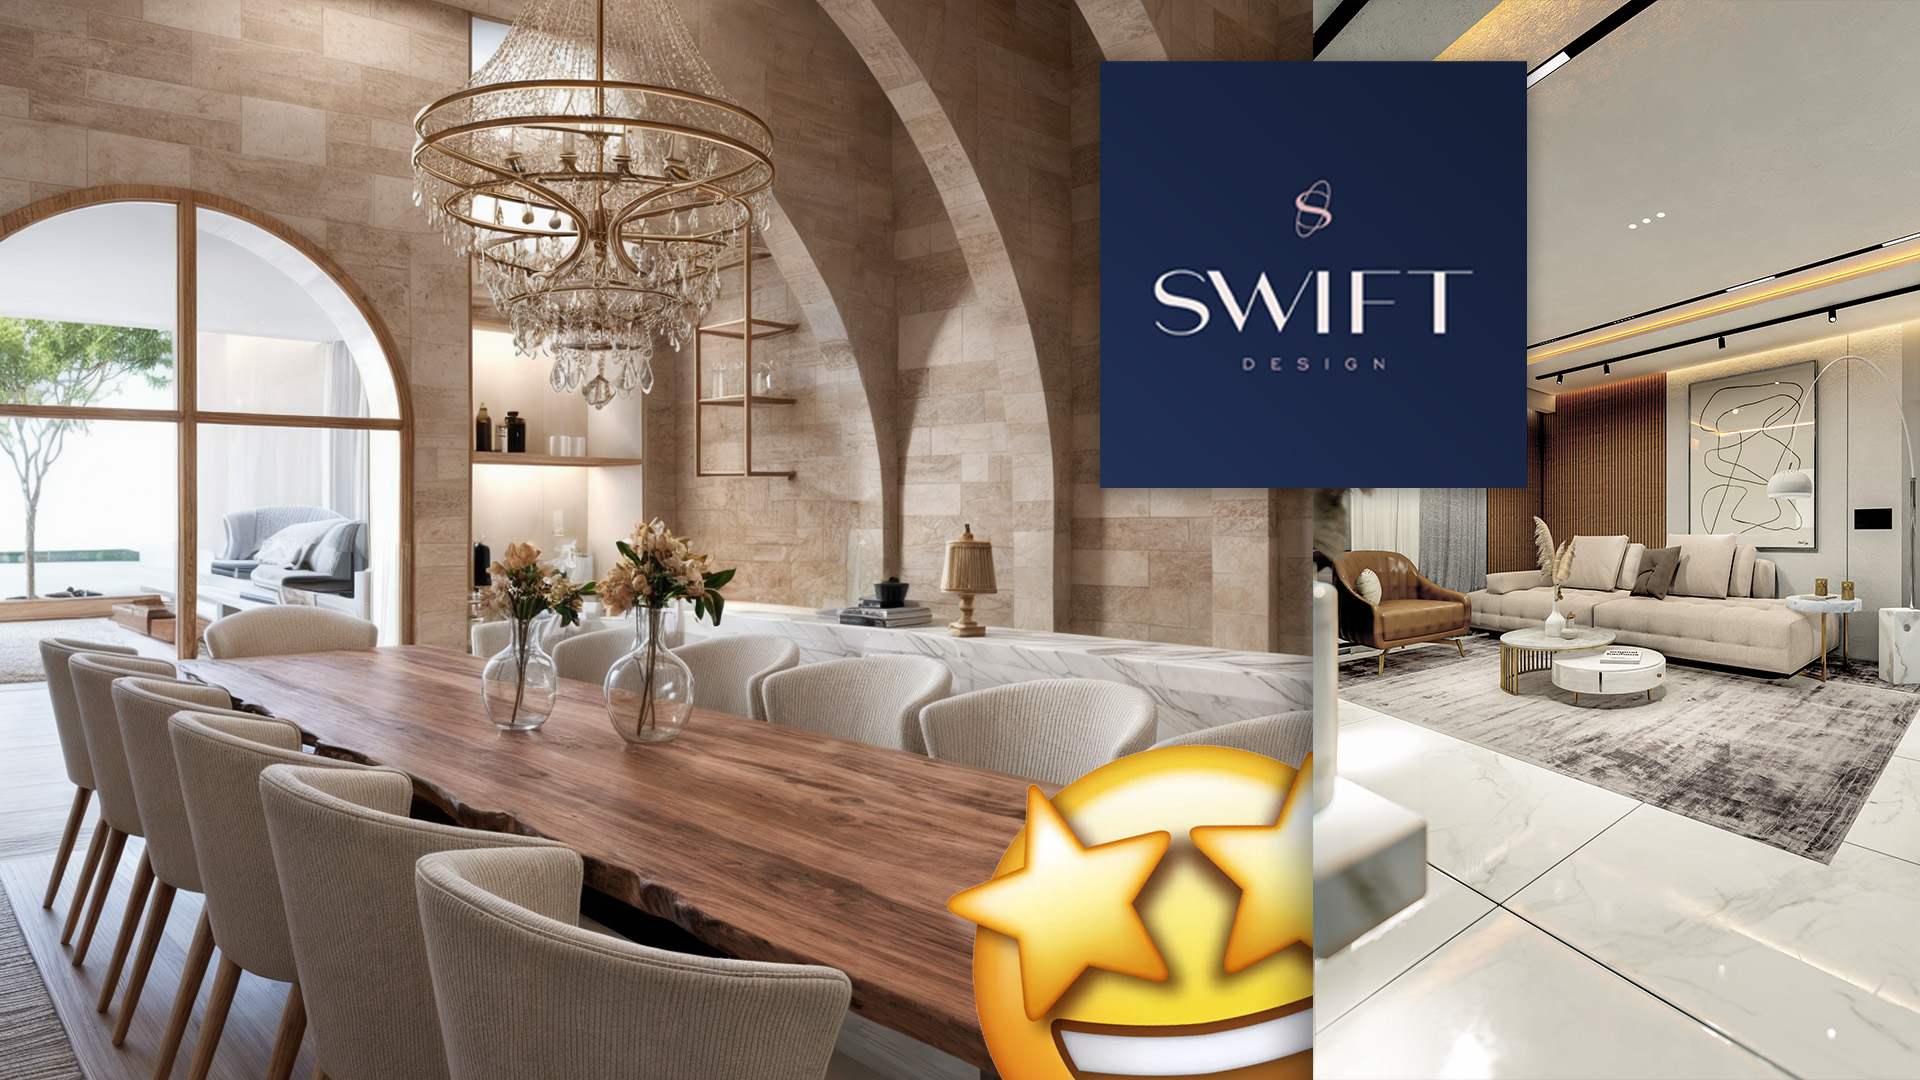 Interior Design for Just €1,500: Swift Design